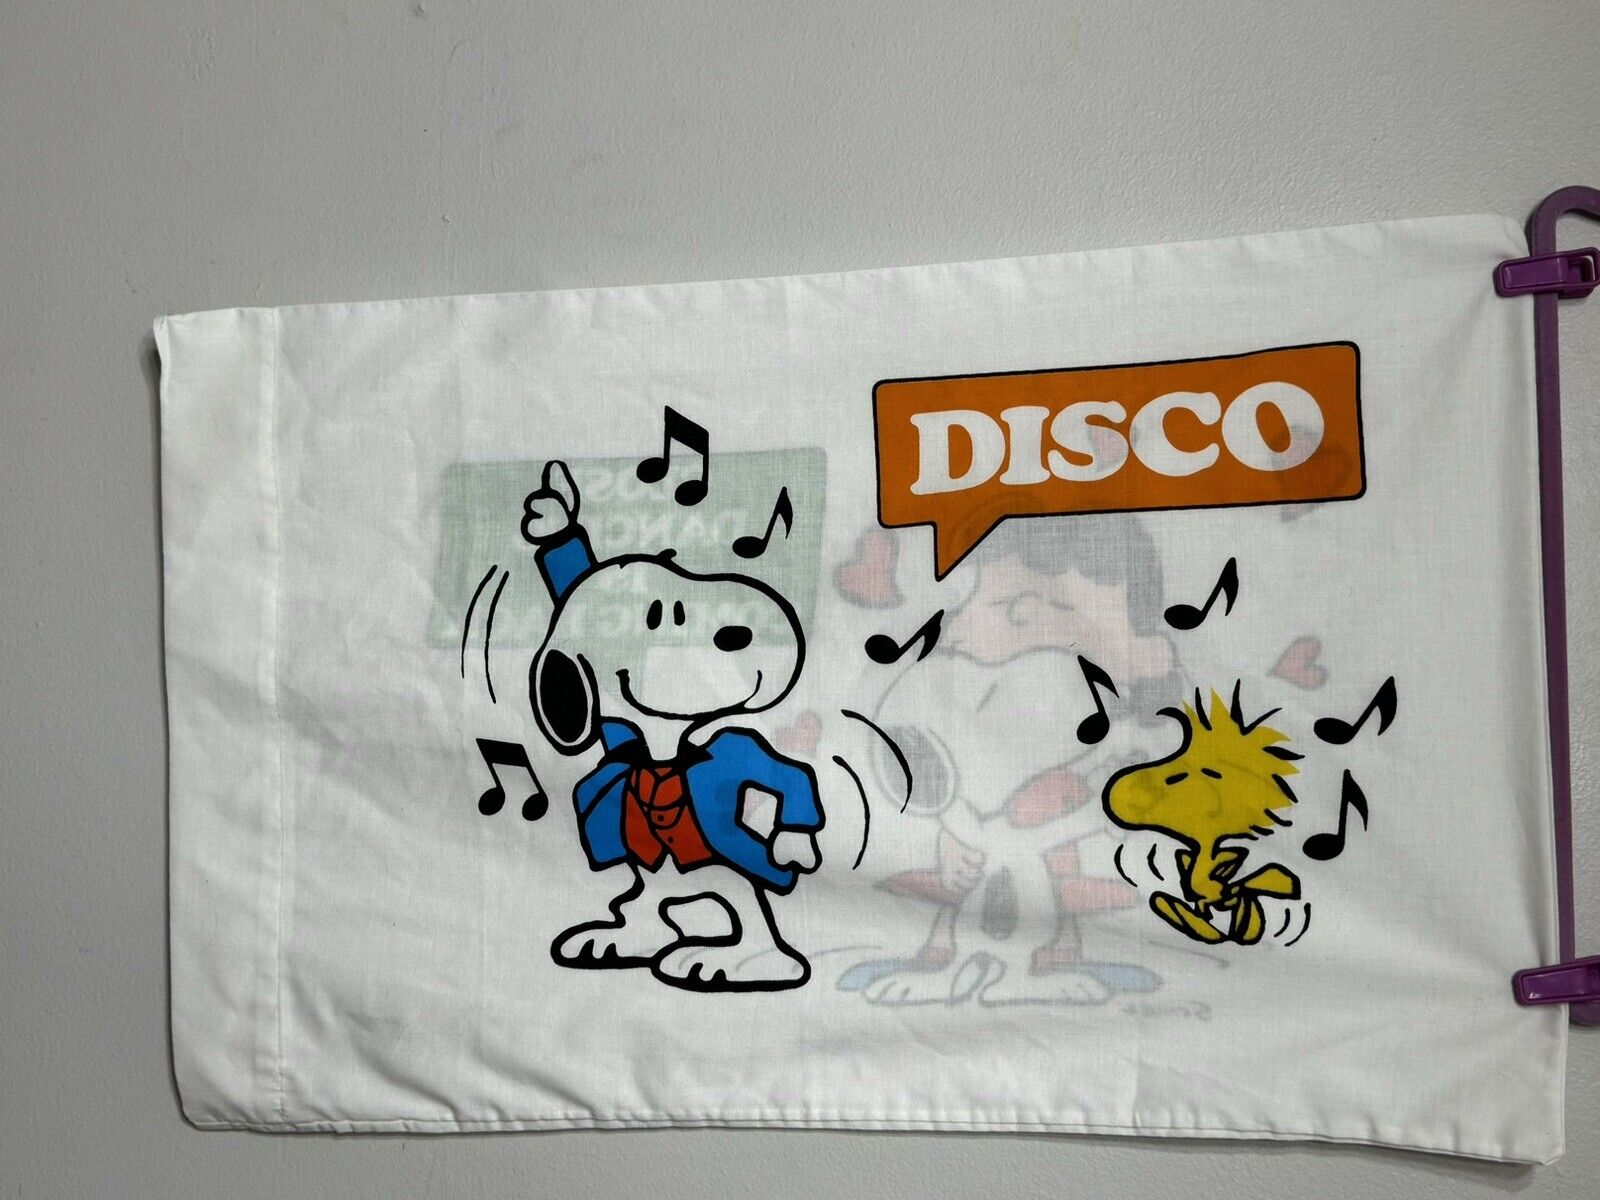 Vintage Snoopy Peanuts Pillowcase “Close Dancing” & “Disco” Standard Size